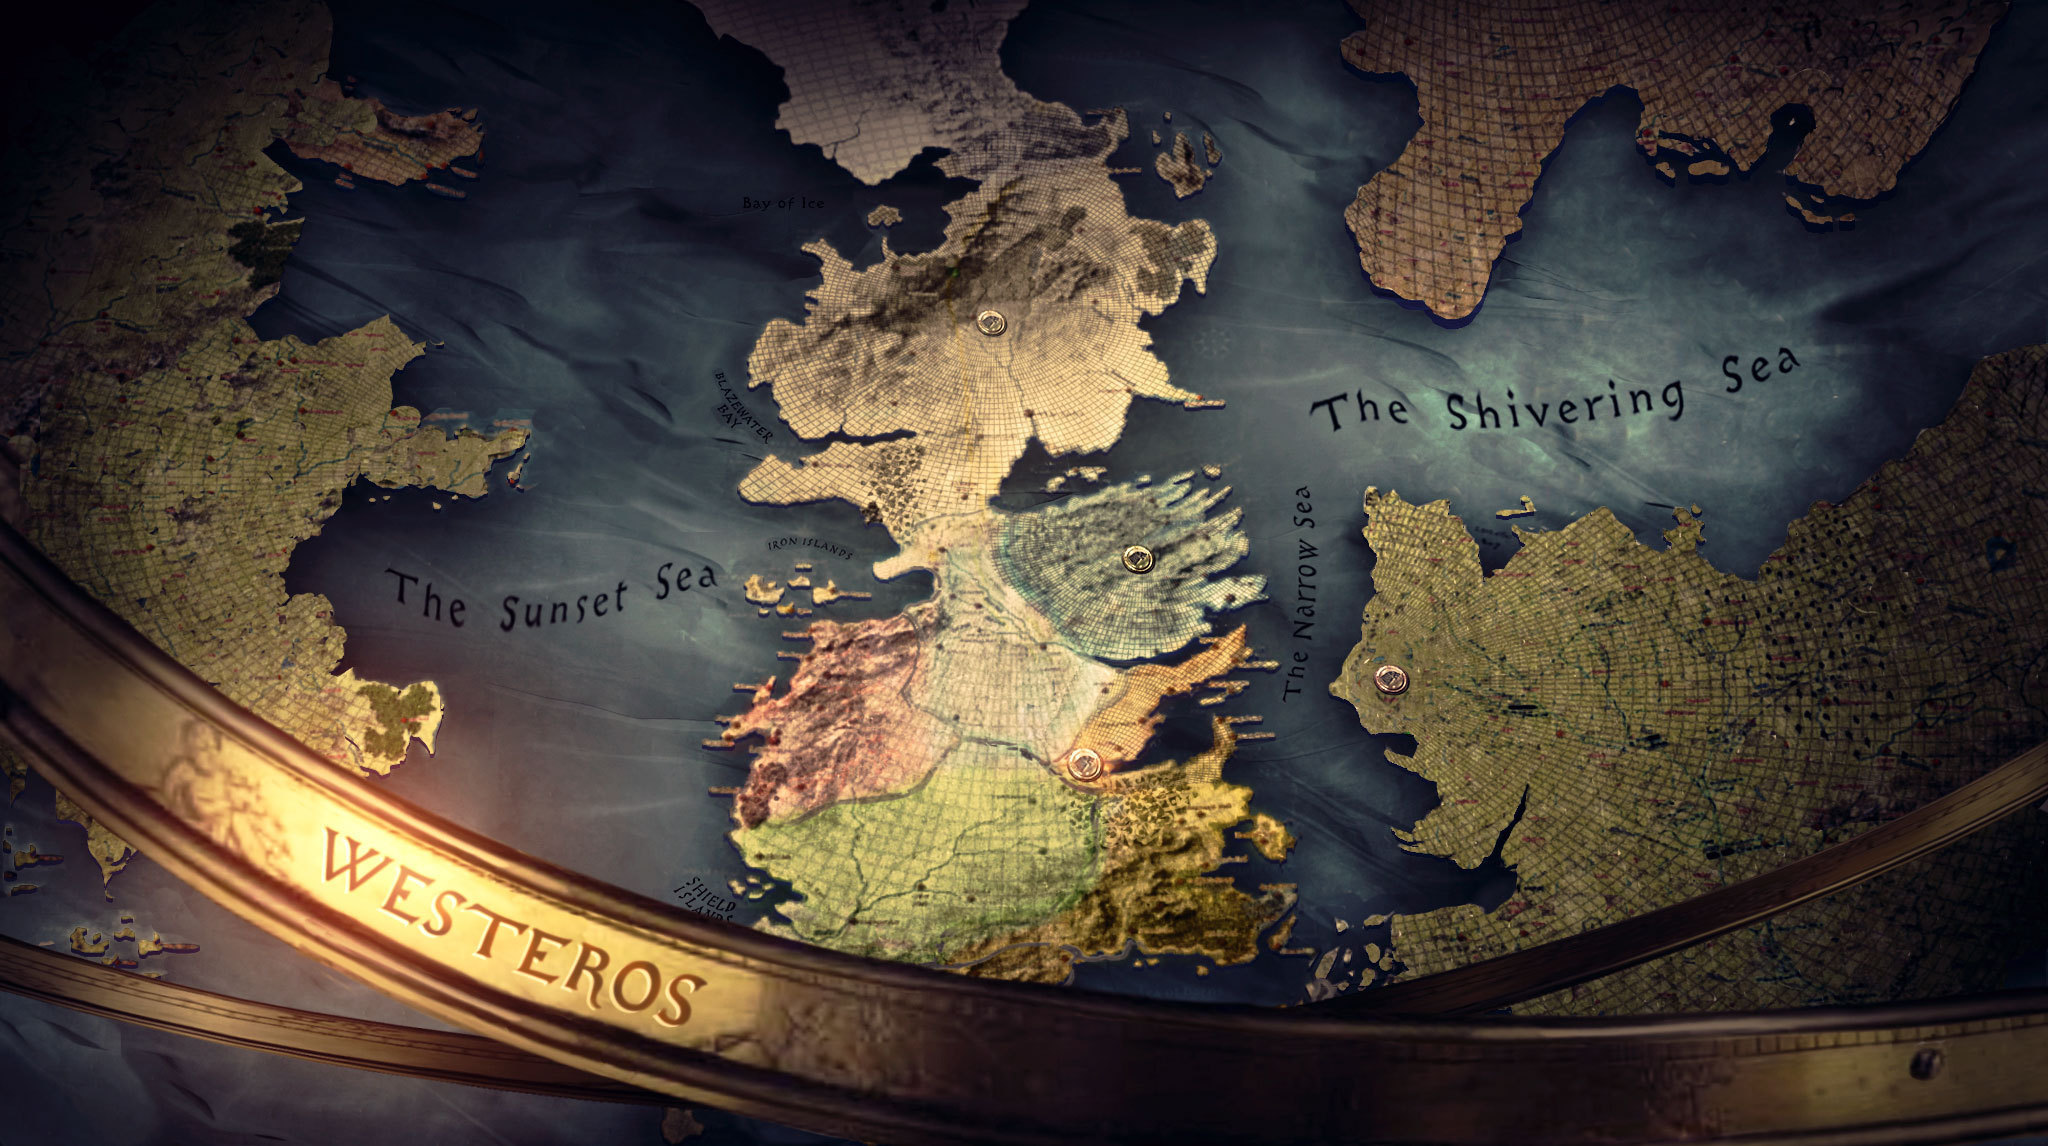 The Seven Kingdoms - Game of Thrones Wallpaper (39088621) - Fanpop